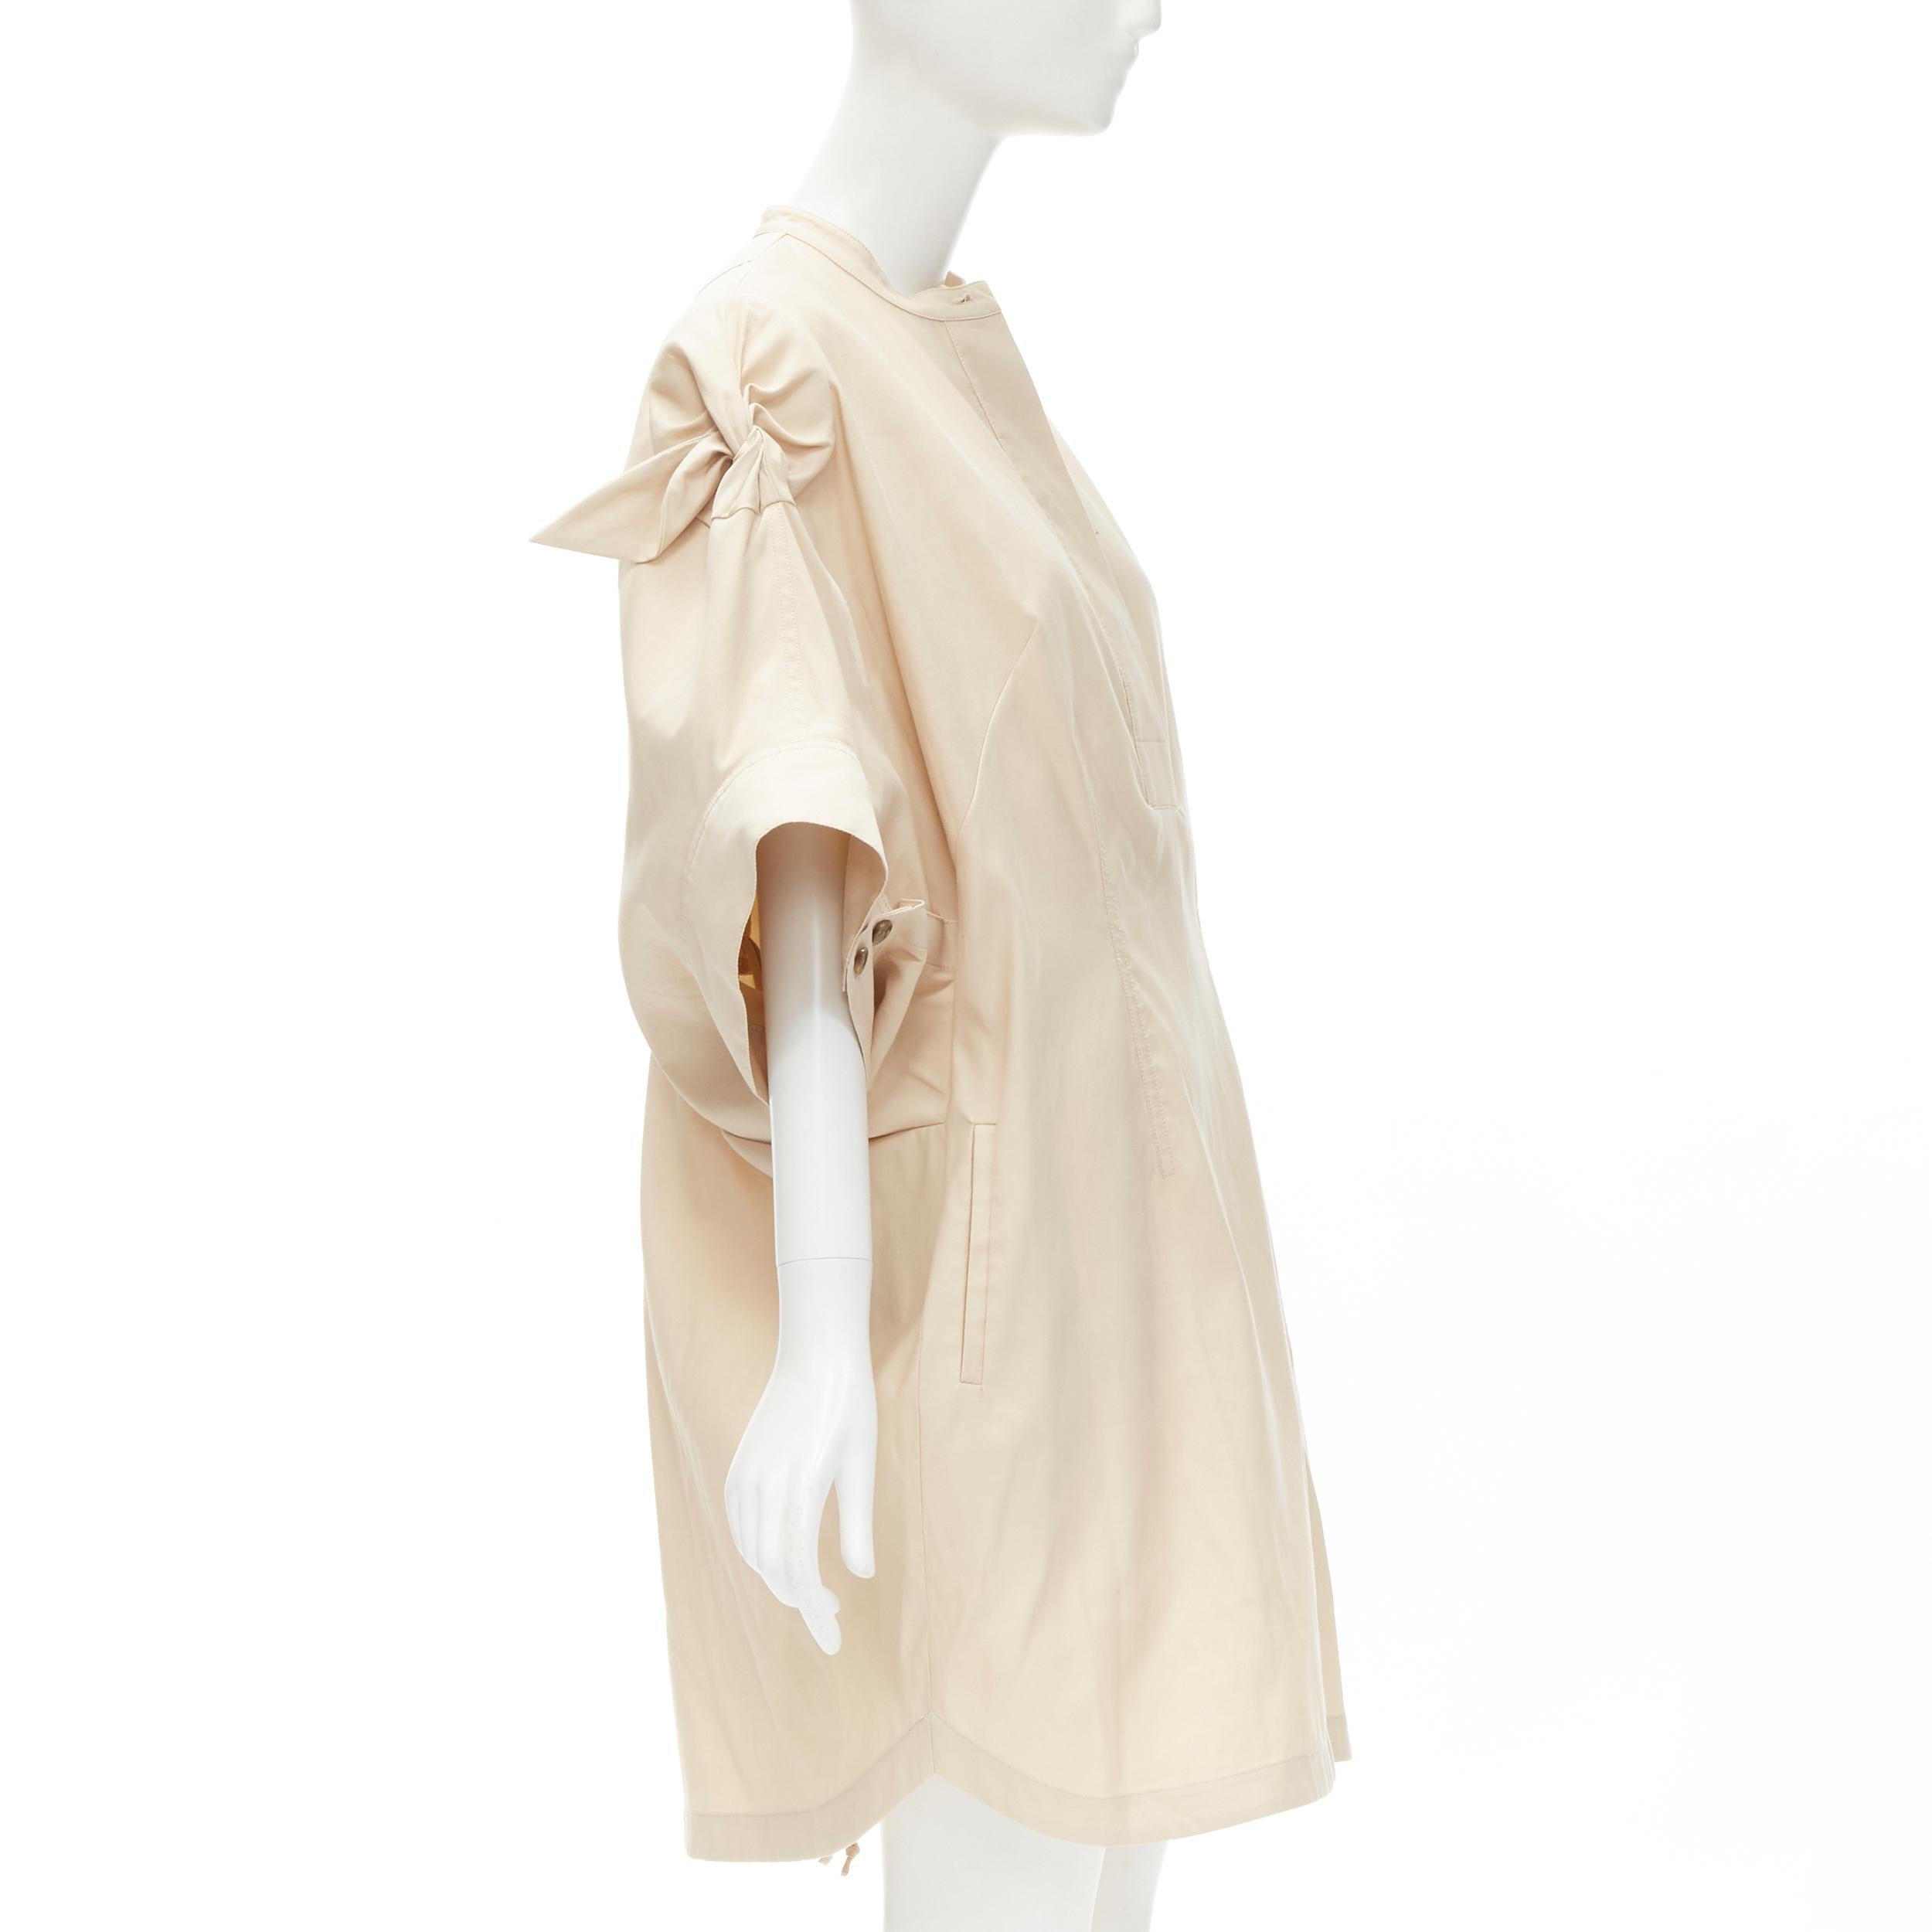 Beige 3.1 PHILLIP LIM beige cotton blend knot tie oversized cocoon dress US2 S For Sale